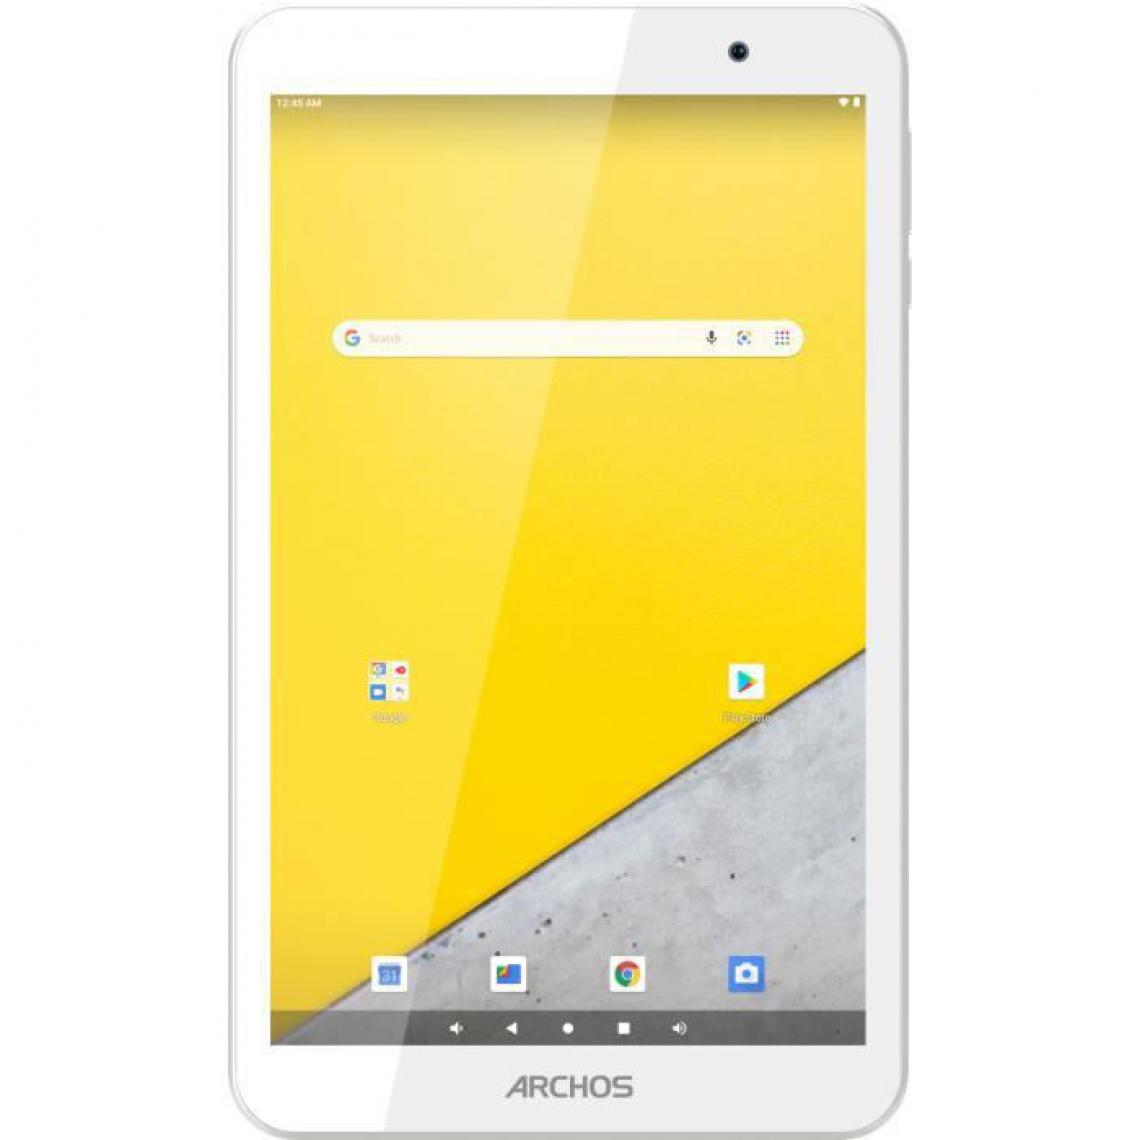 Archos - ARCHOS Tablette Tactile T80 - WiFi - 8 - Ecran HD IPS - Stockage 16Go - Tablette Android